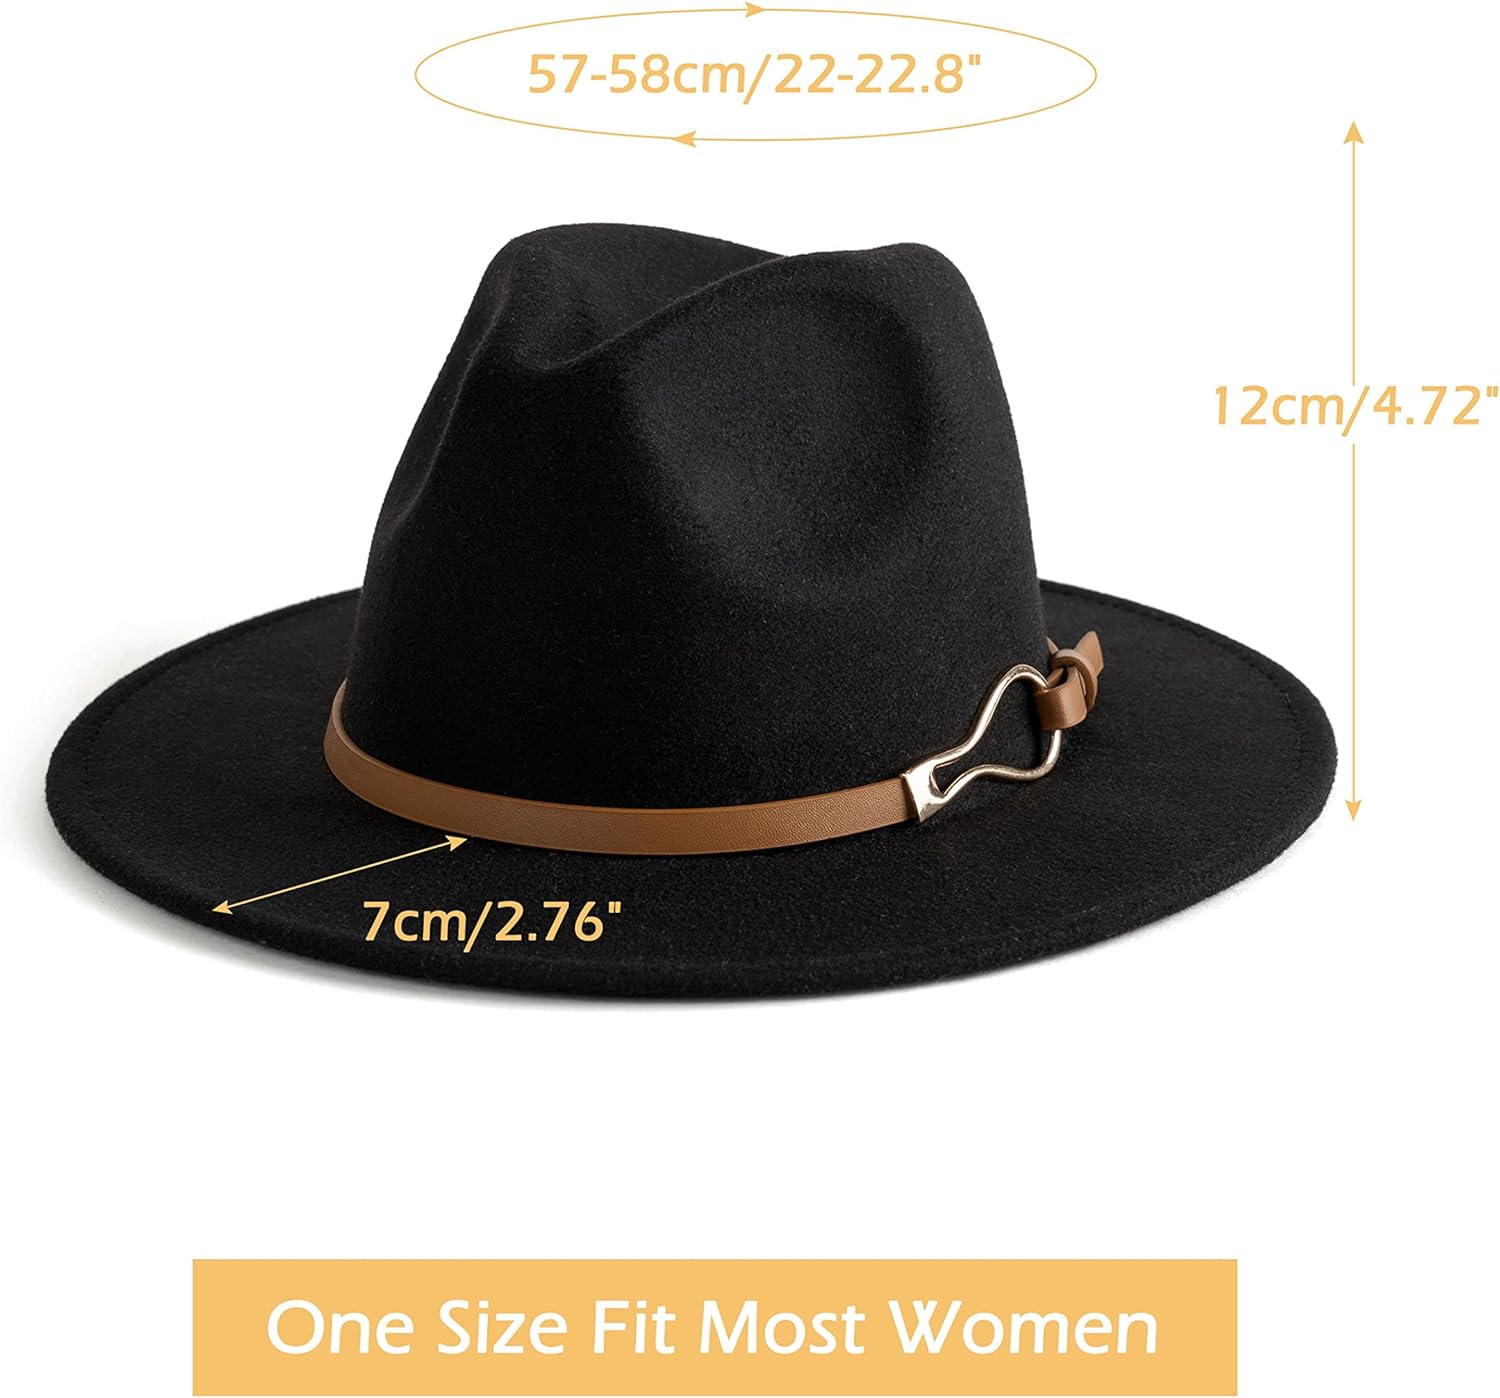 Fashion Women Wide Brim Fedora Floppy Panama Hat with Belt Buckle